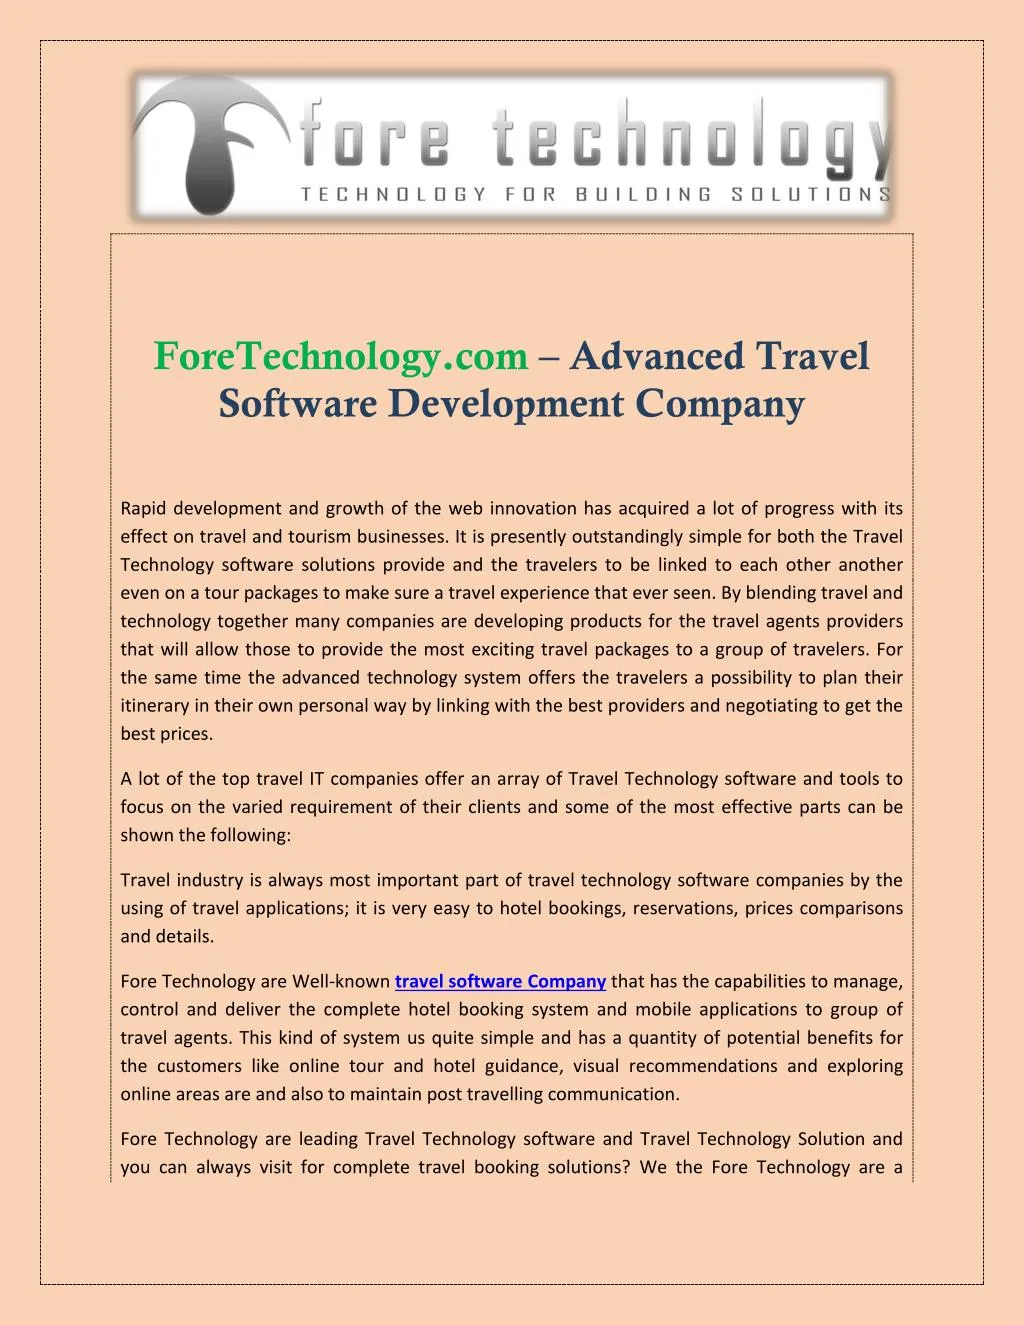 foretechnology com advanced travel software n.